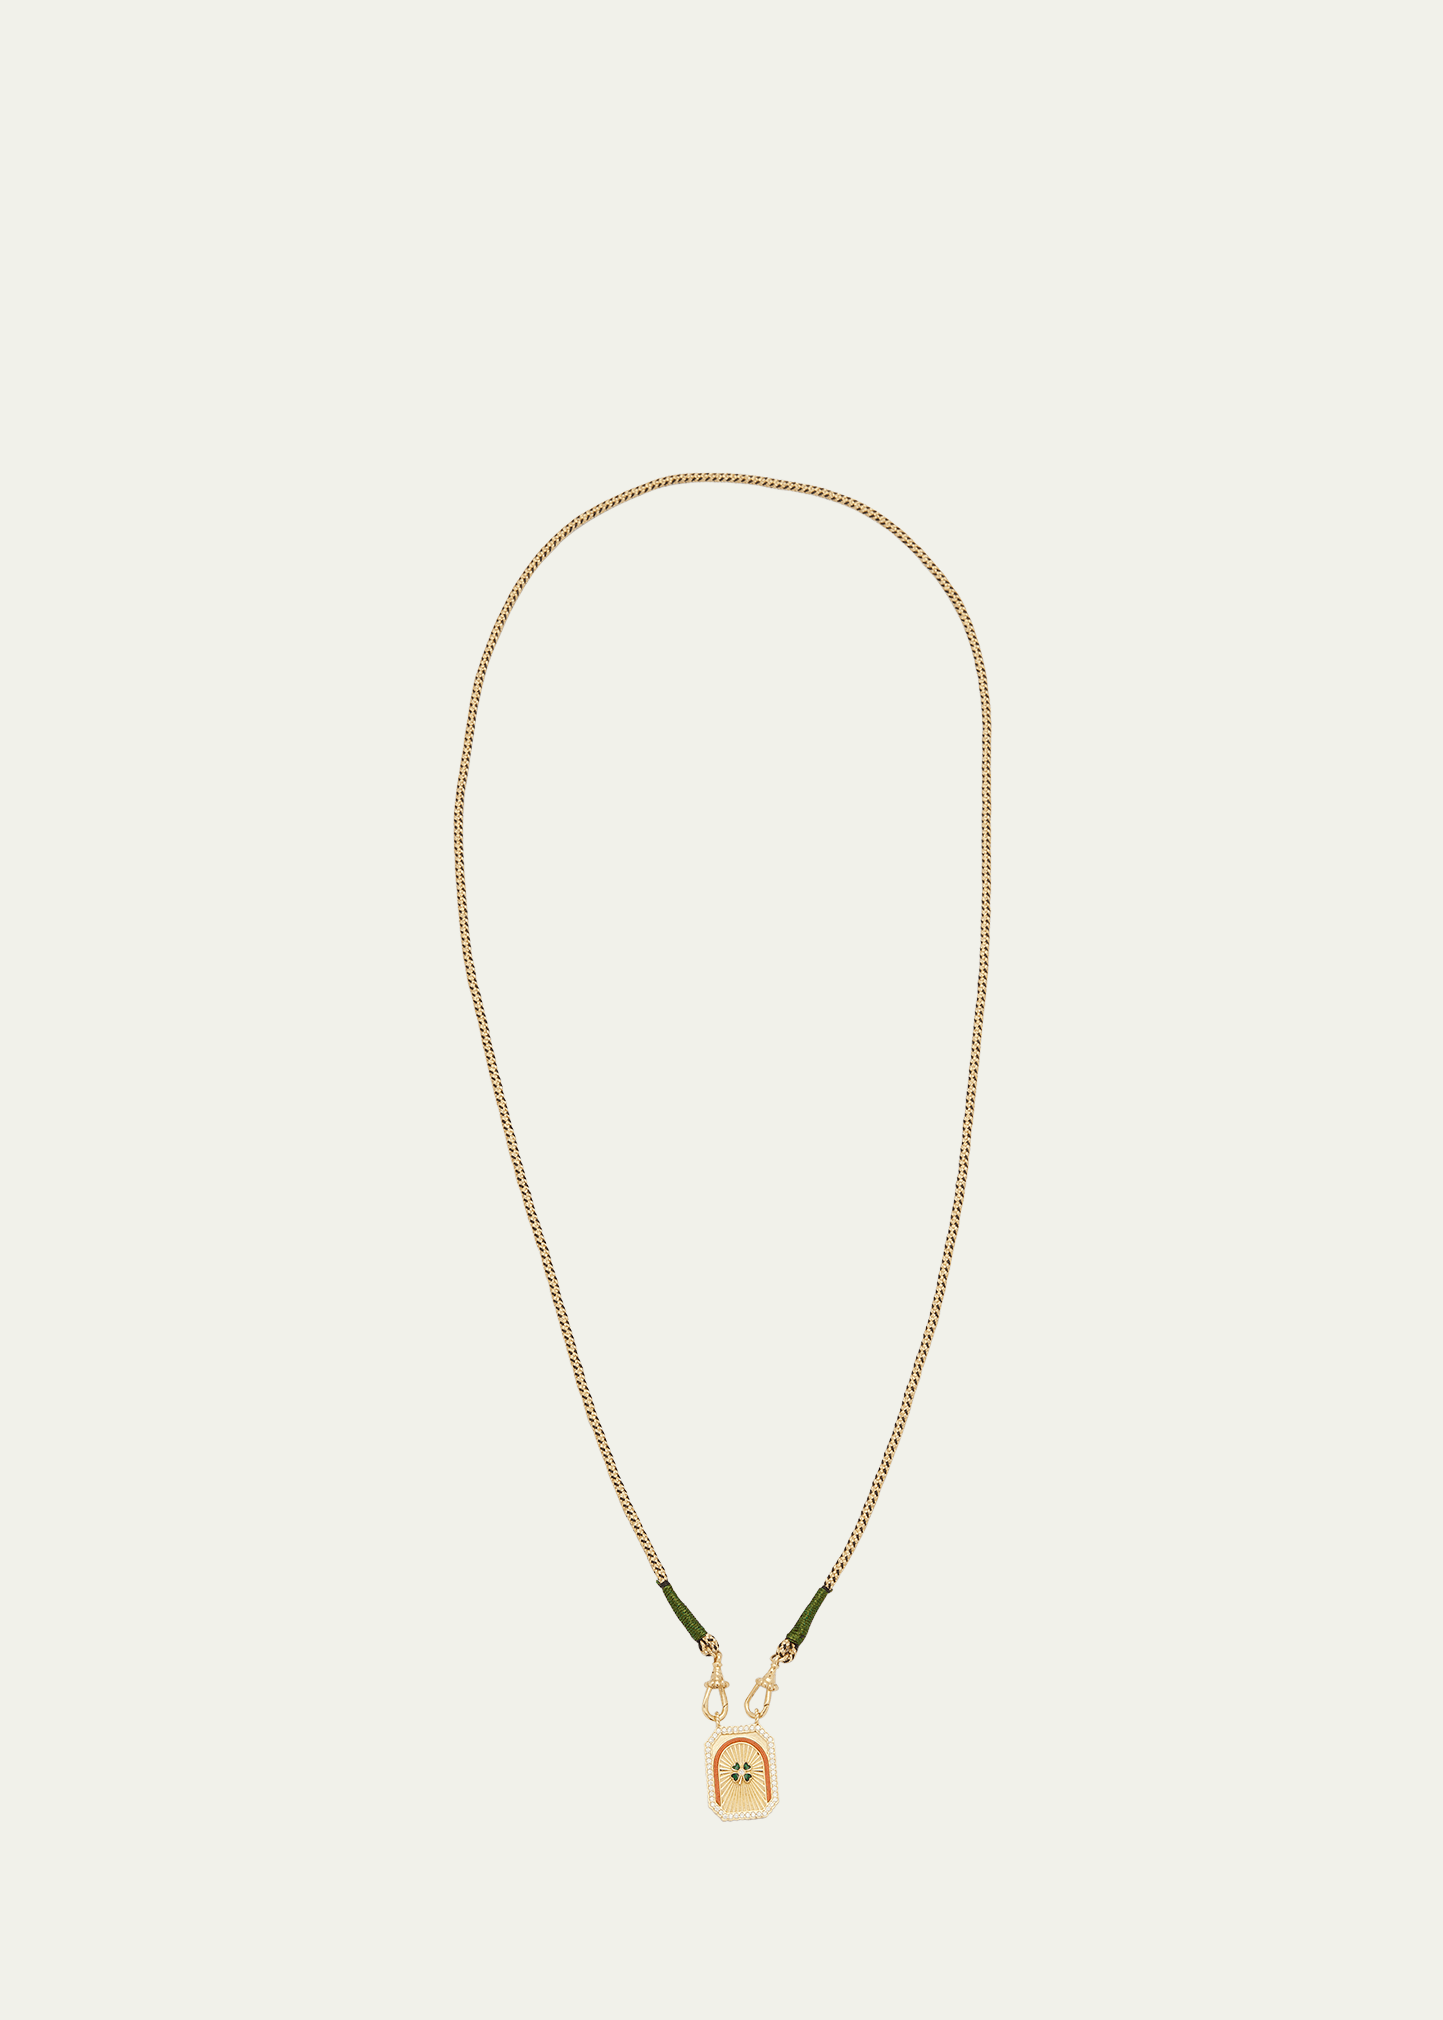 Marie Lichtenberg 18k Rathi Link Chain Necklace with Mini Clover Pendant